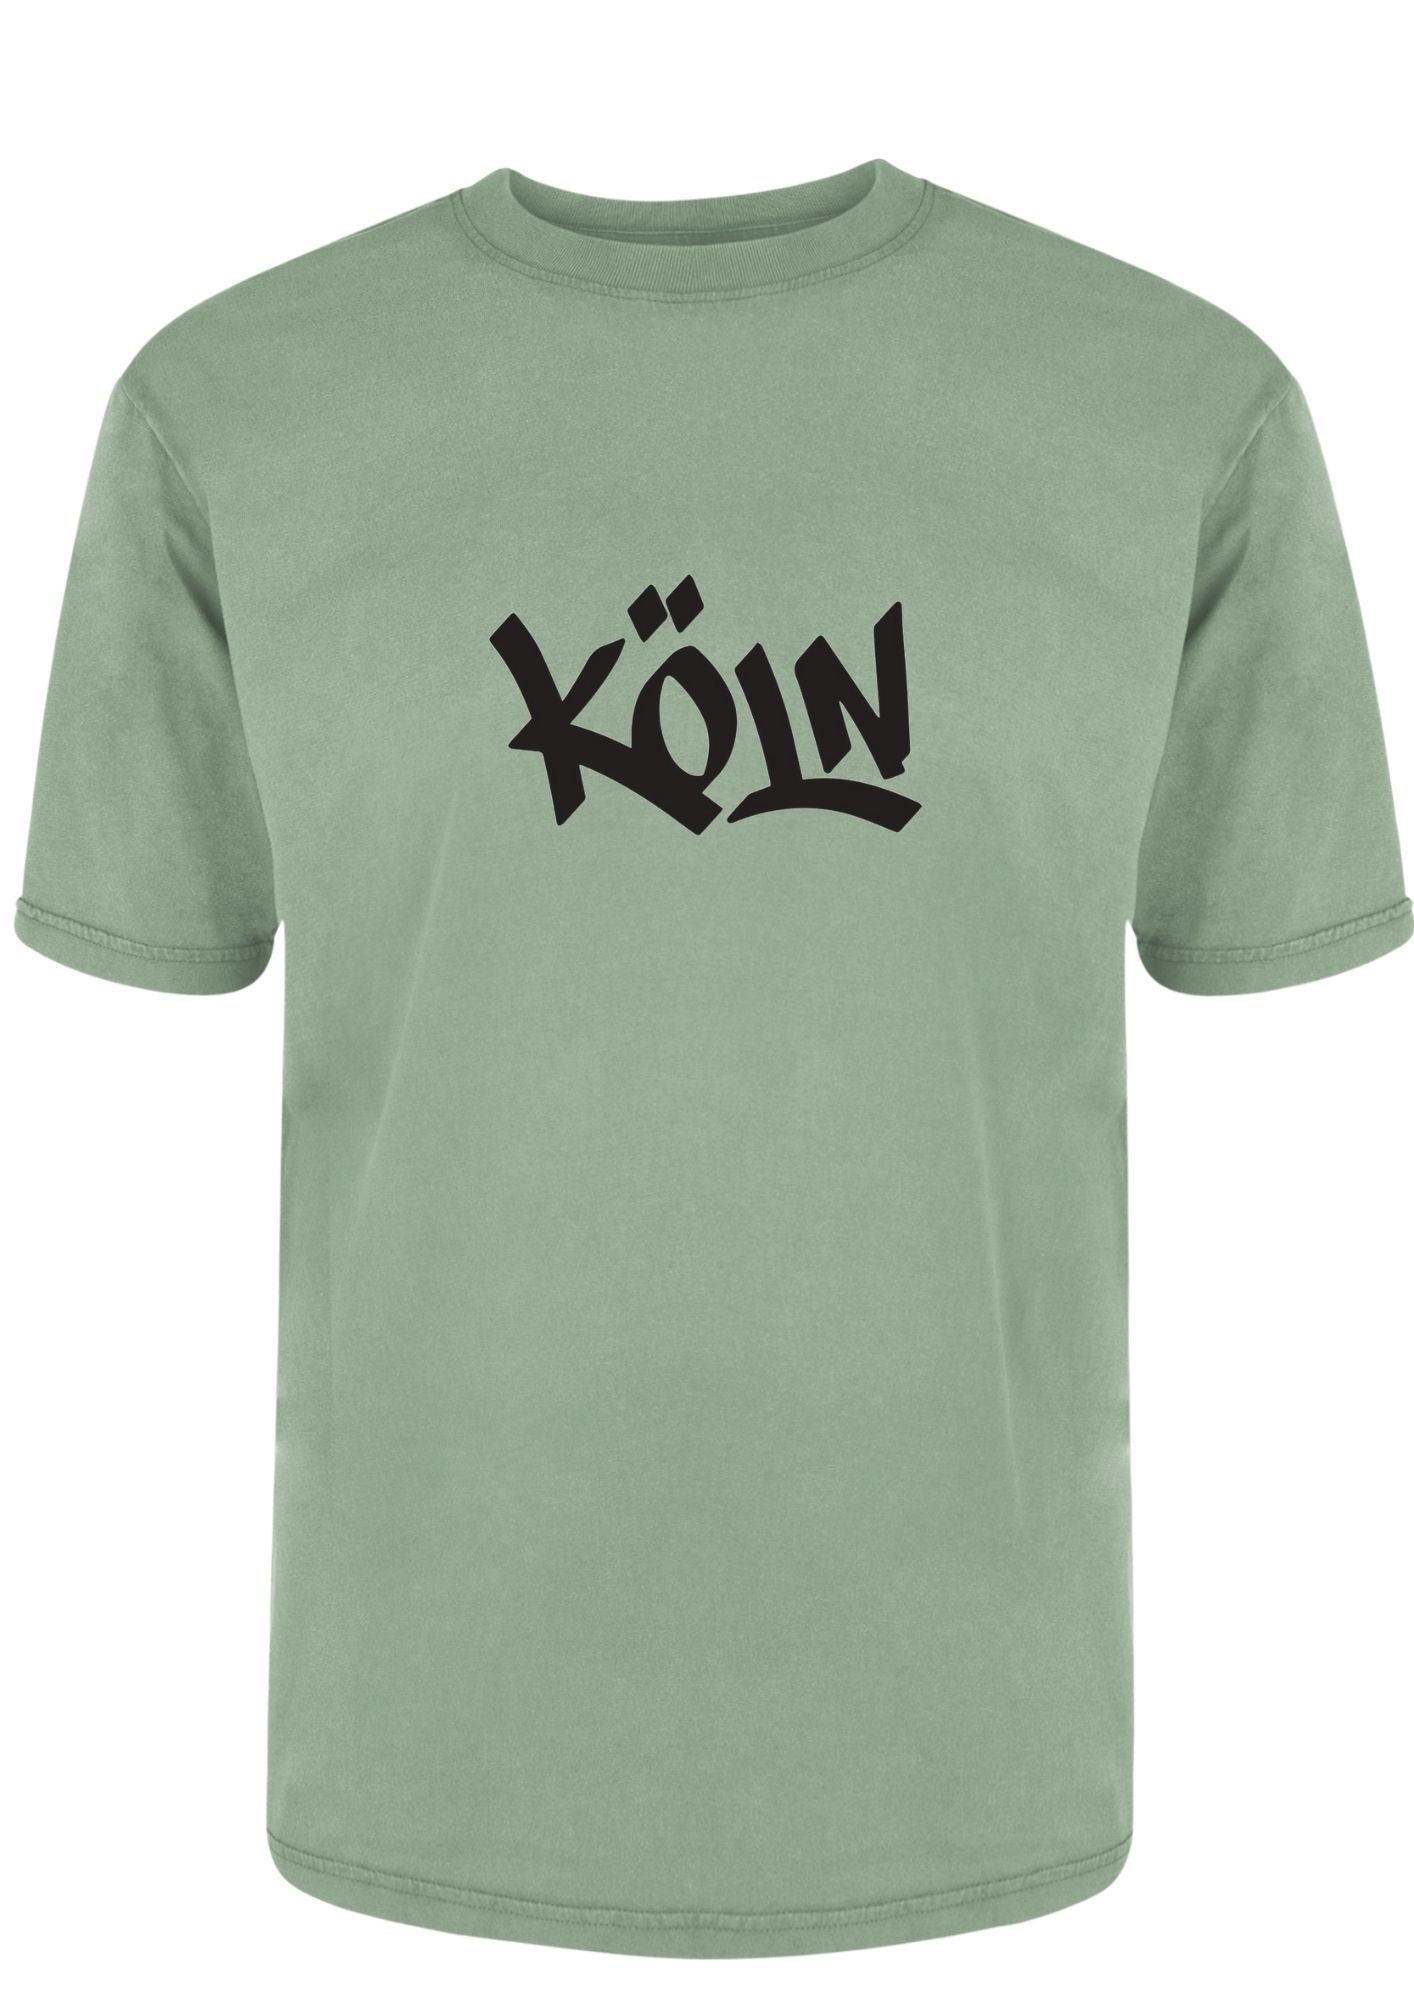 Köln (Big Letters) Unisex T-Shirt